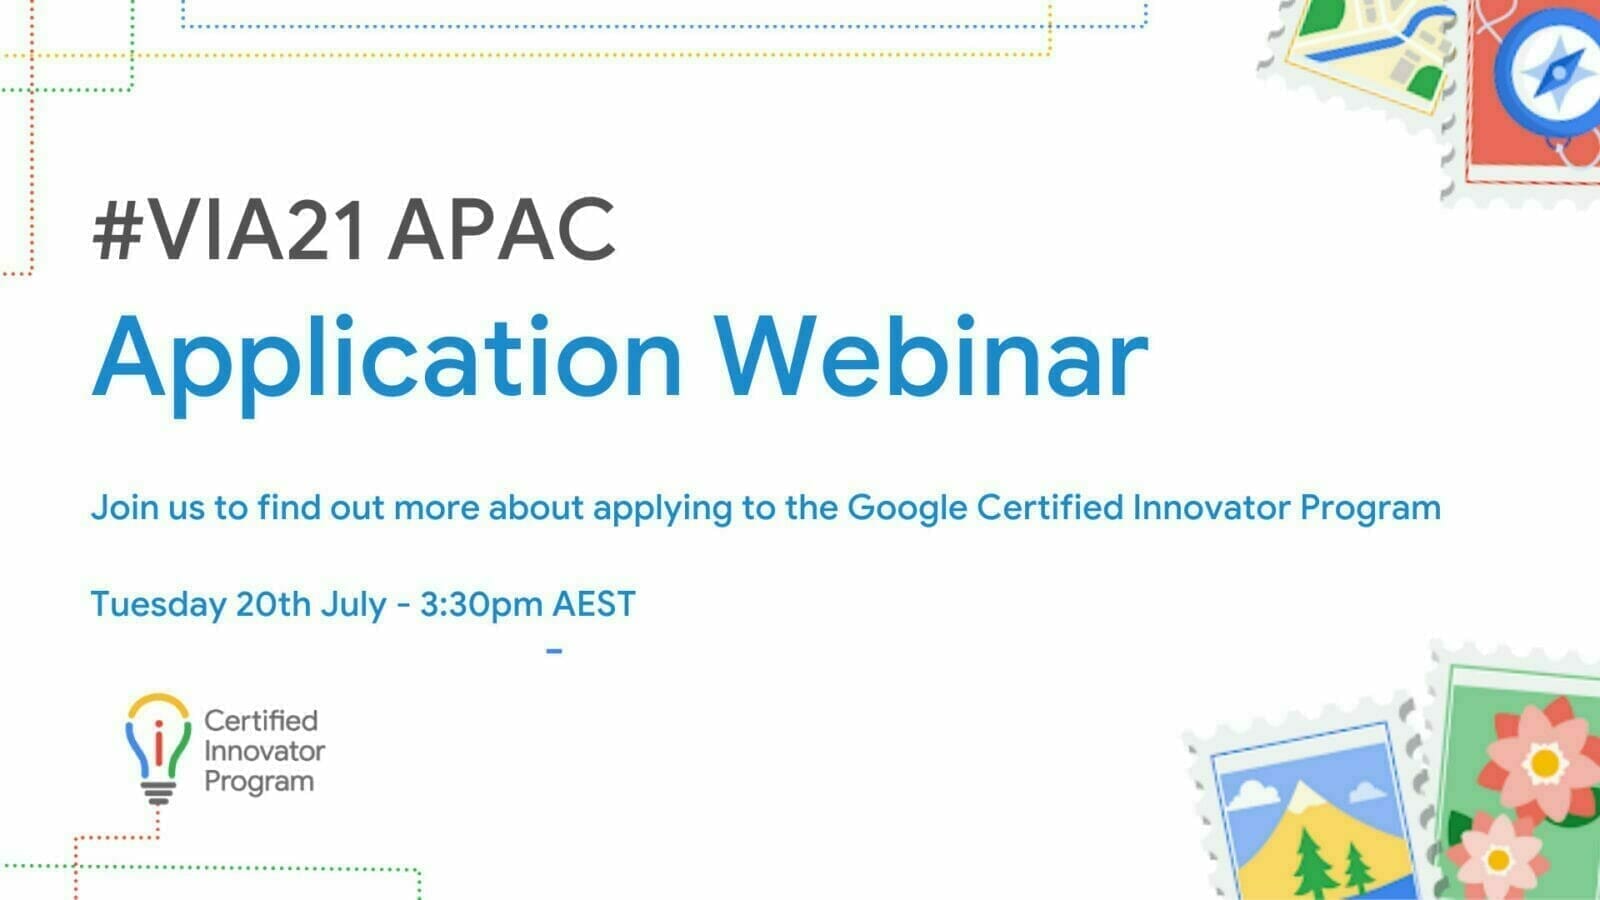 [Google for Education] VIA21 APAC Application Webinar